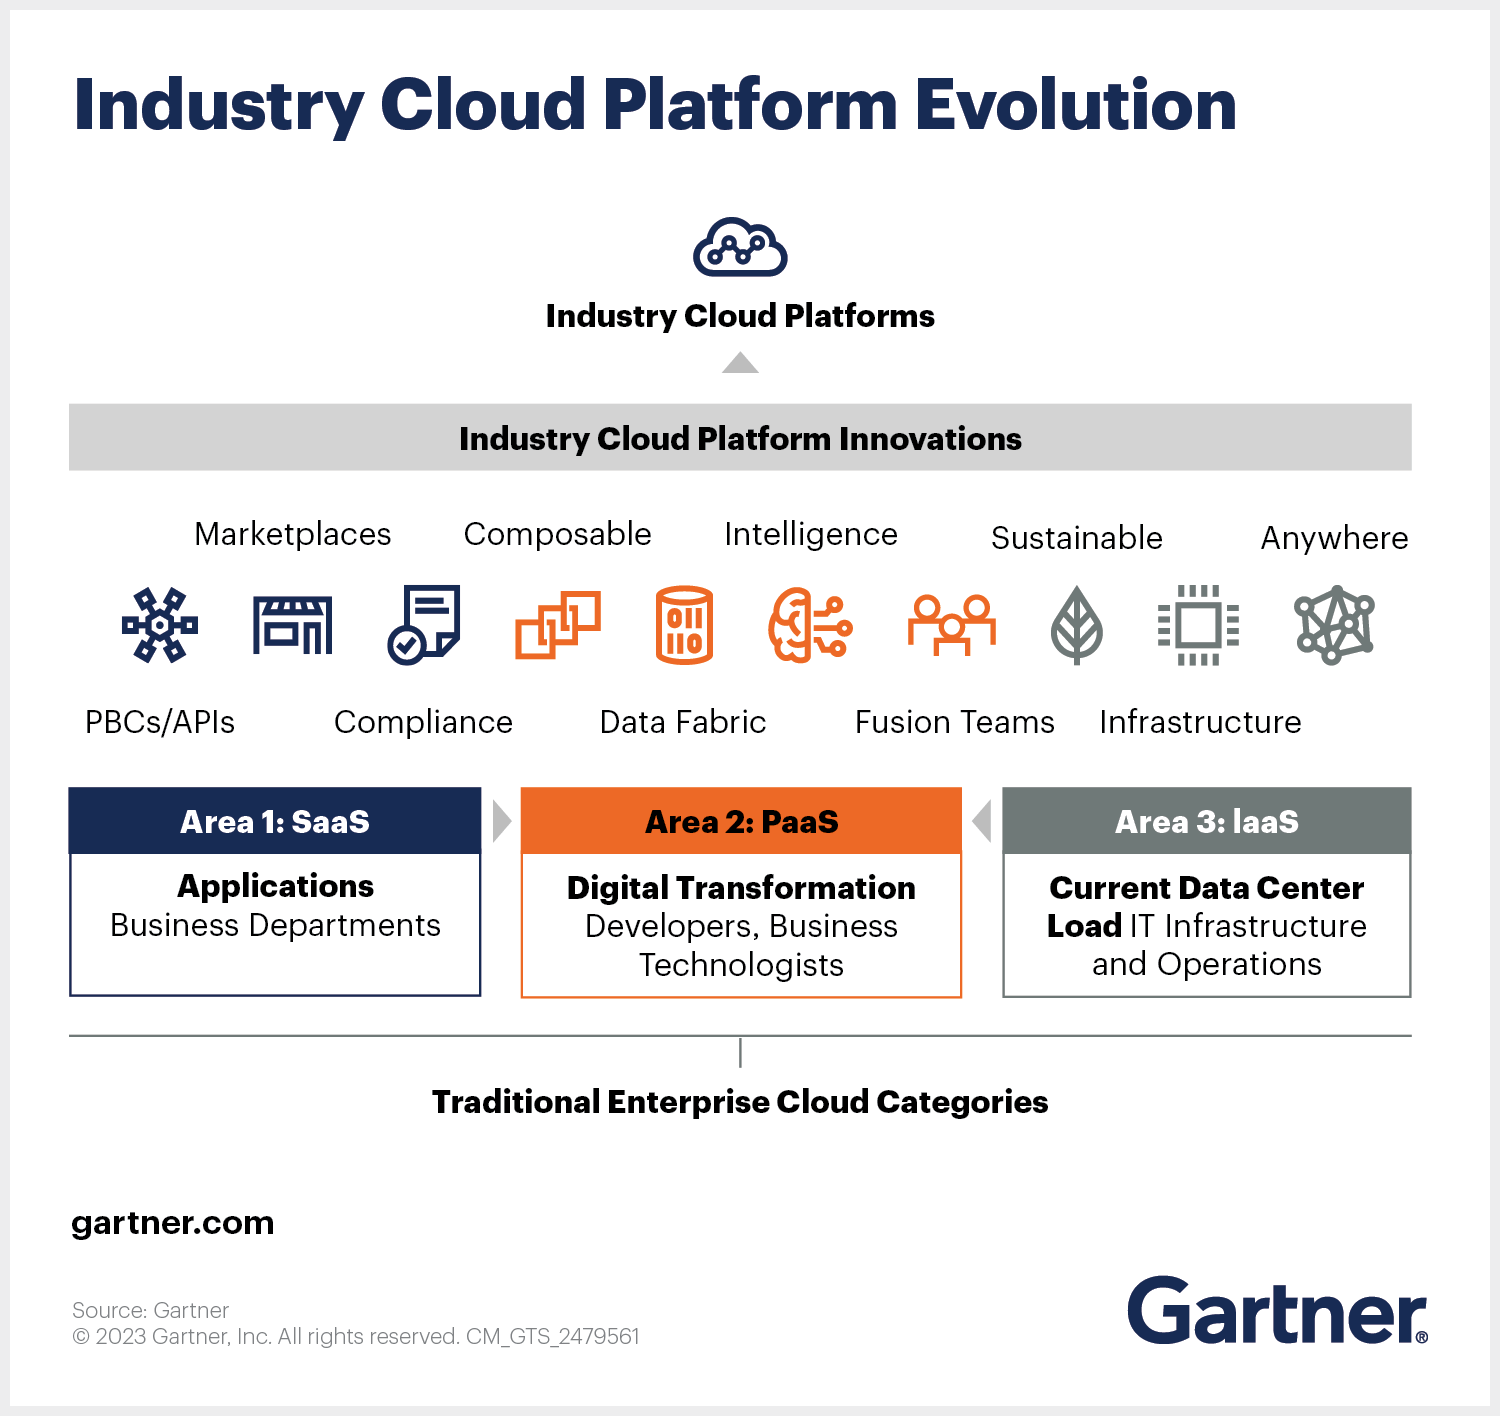 Industry Cloud Platform Evolution